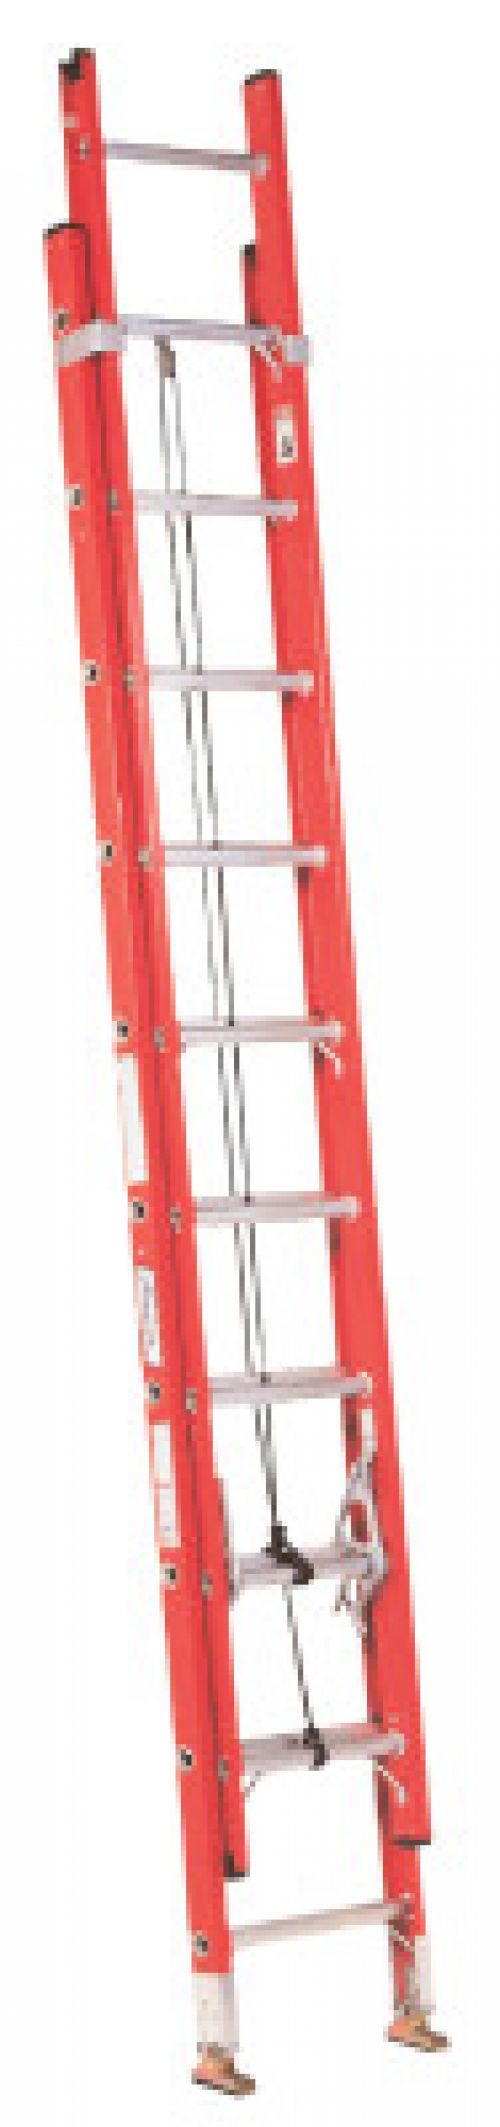 FE3200 Series Fiberglass Channel Extension Ladders, 16 ft, Class IA, 300 lb